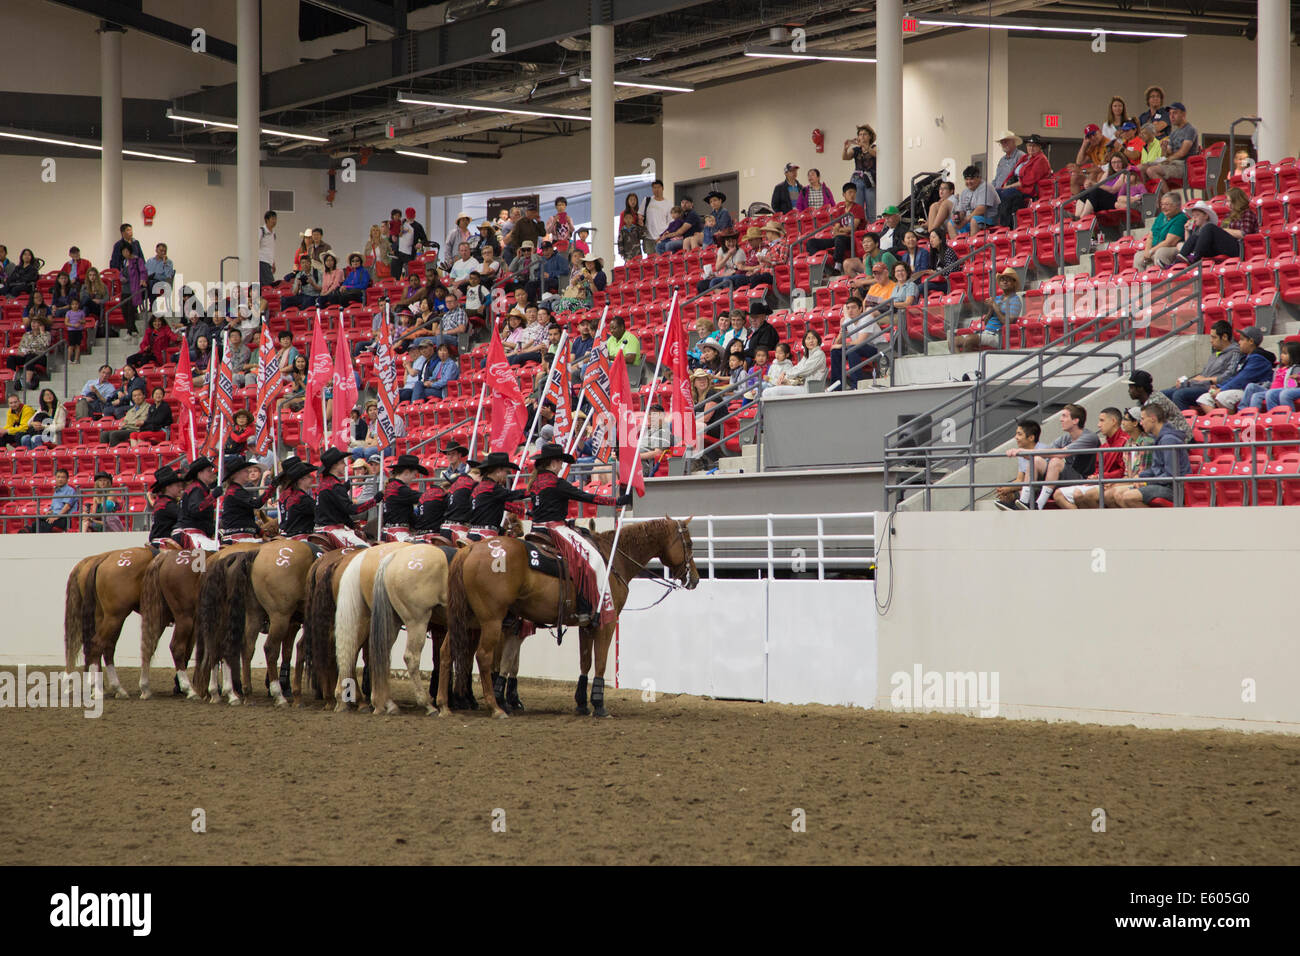 Calgary stampede riders on horseback in arena Stock Photo